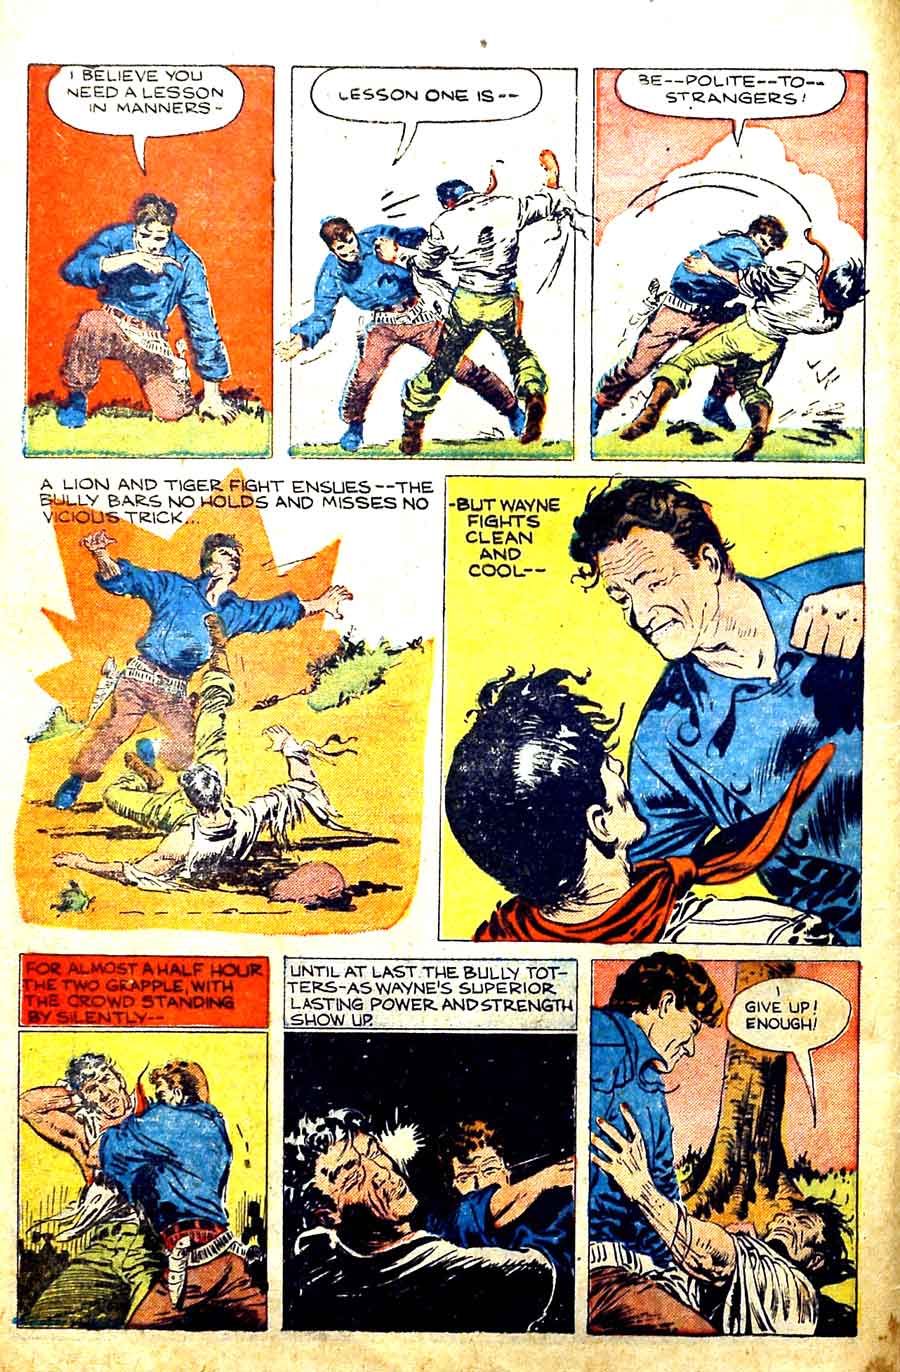 John Wayne Adventure Comics #3 golden age 1950s western comic book page art by Al Williamson / Frank Frazetta